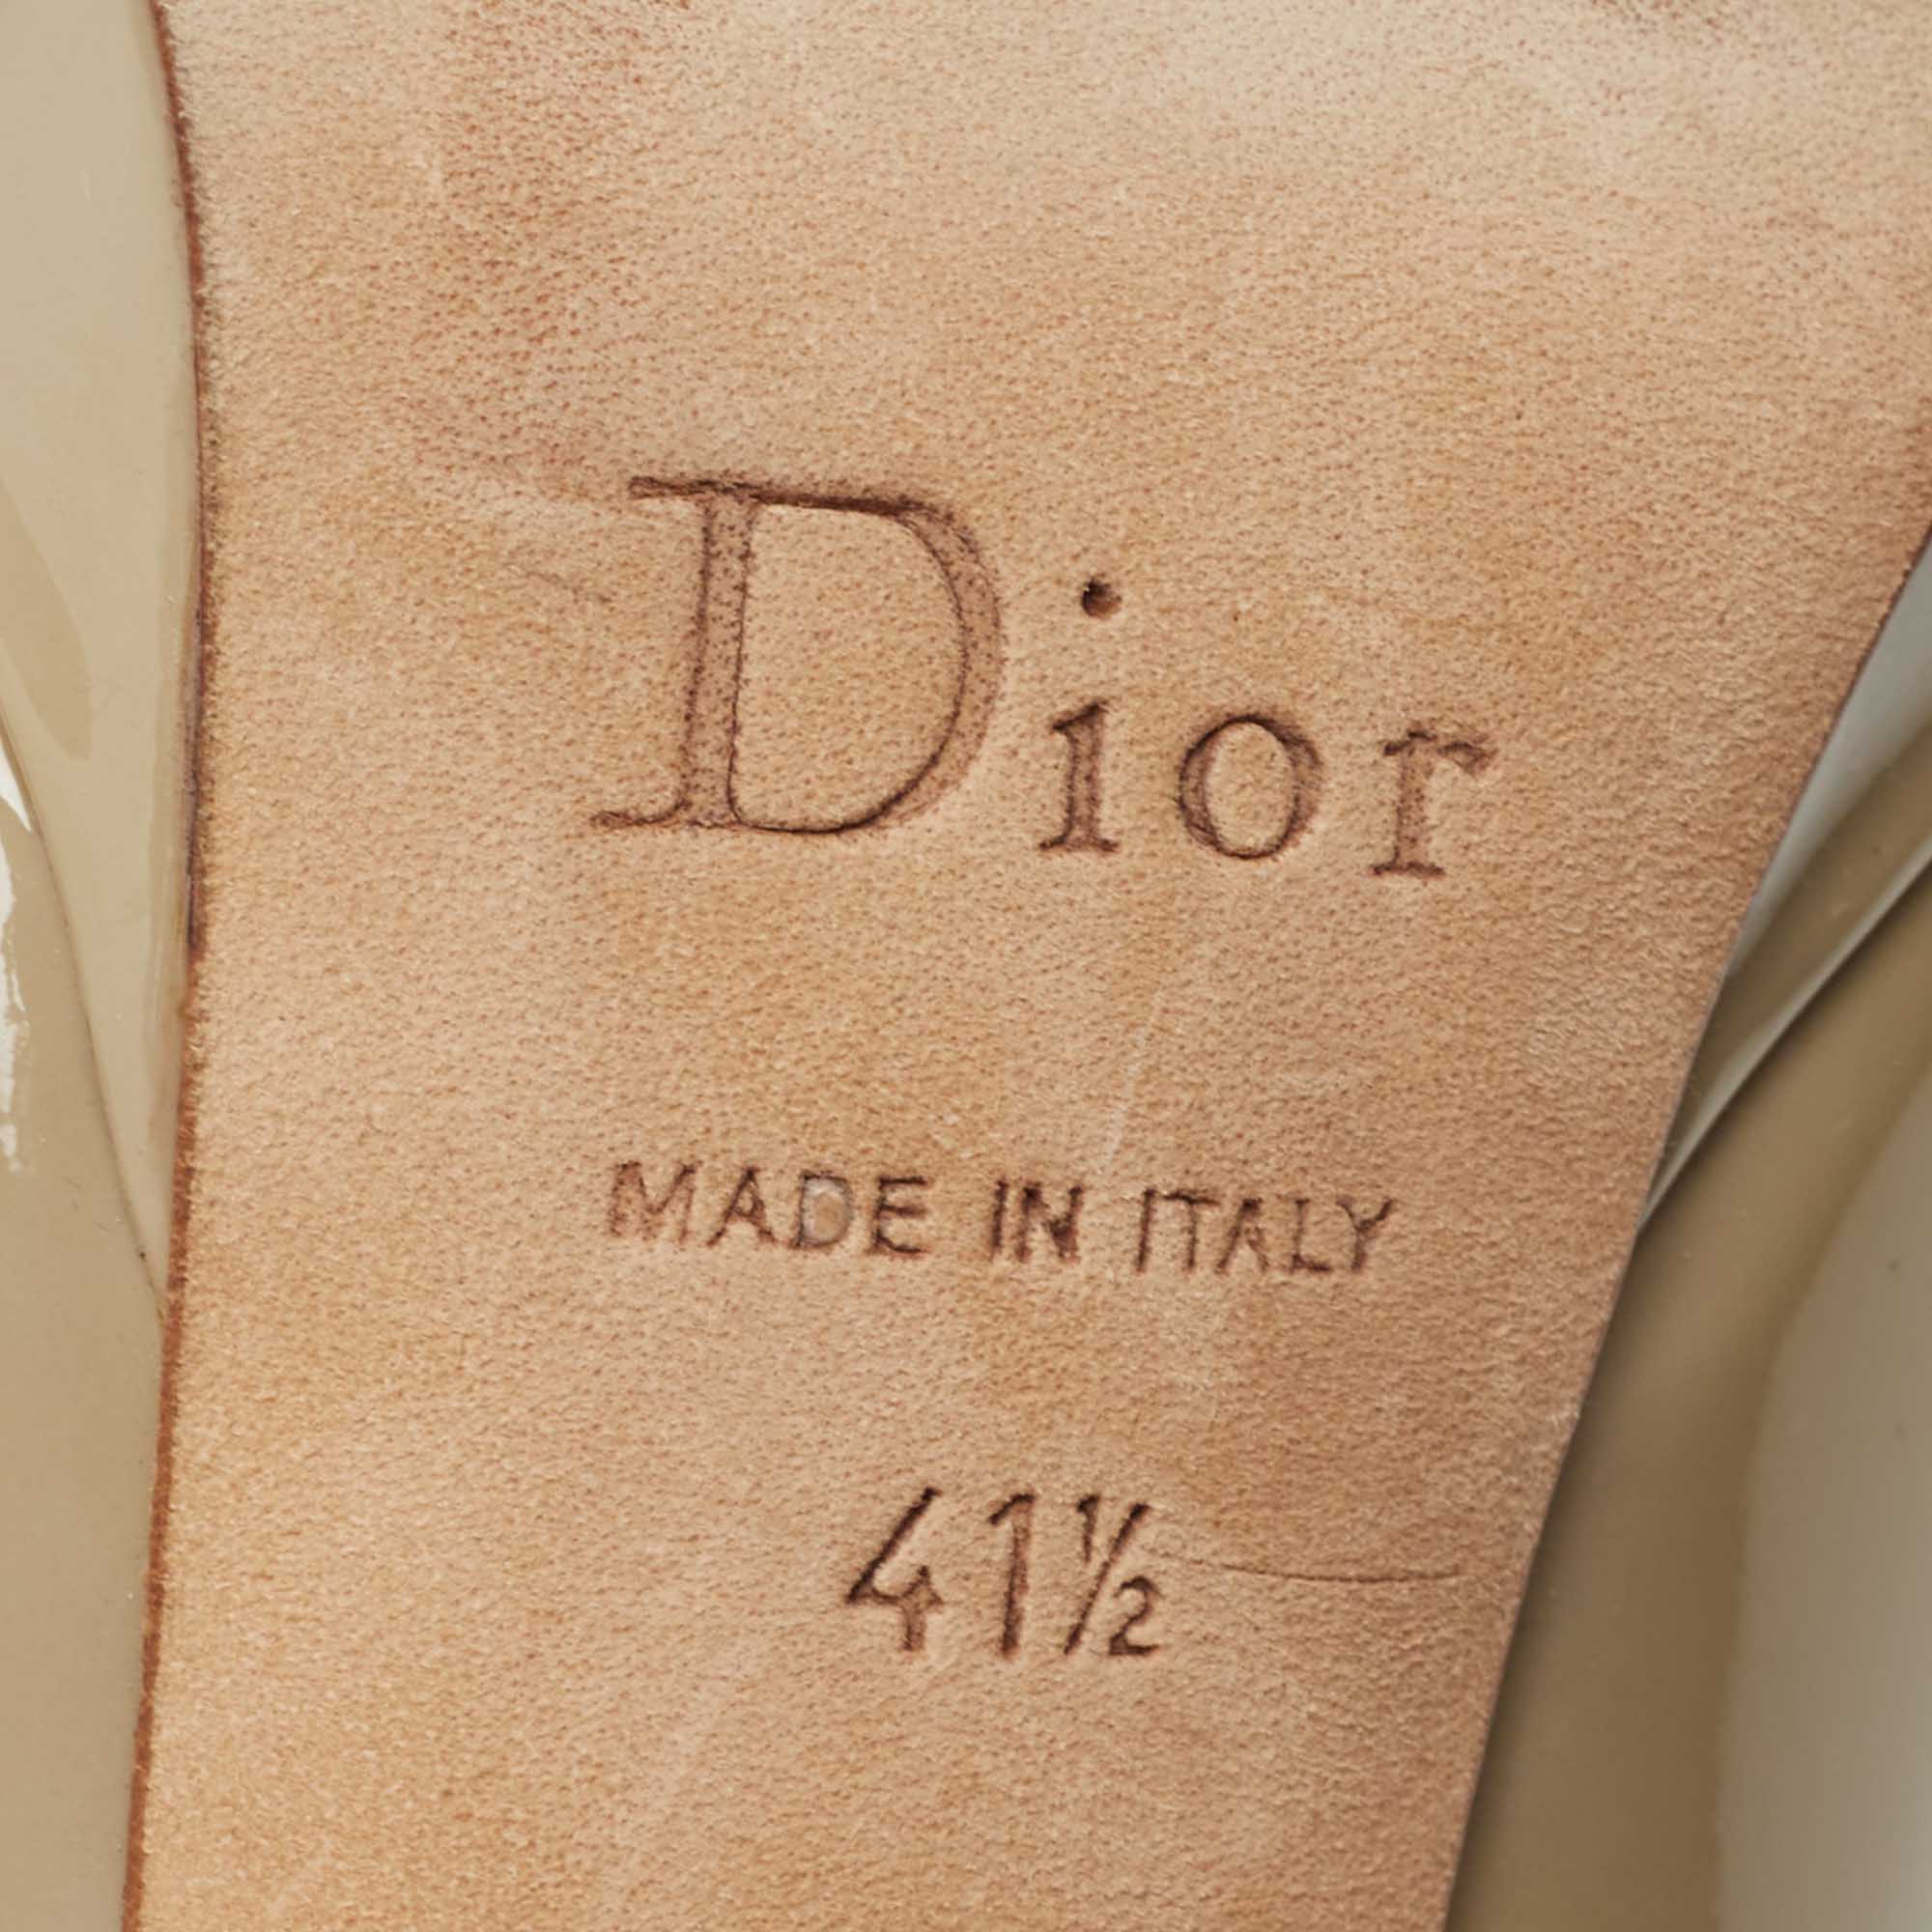 Dior Grey Patent Leather Idyll Peep Toe Pumps Size 41.5